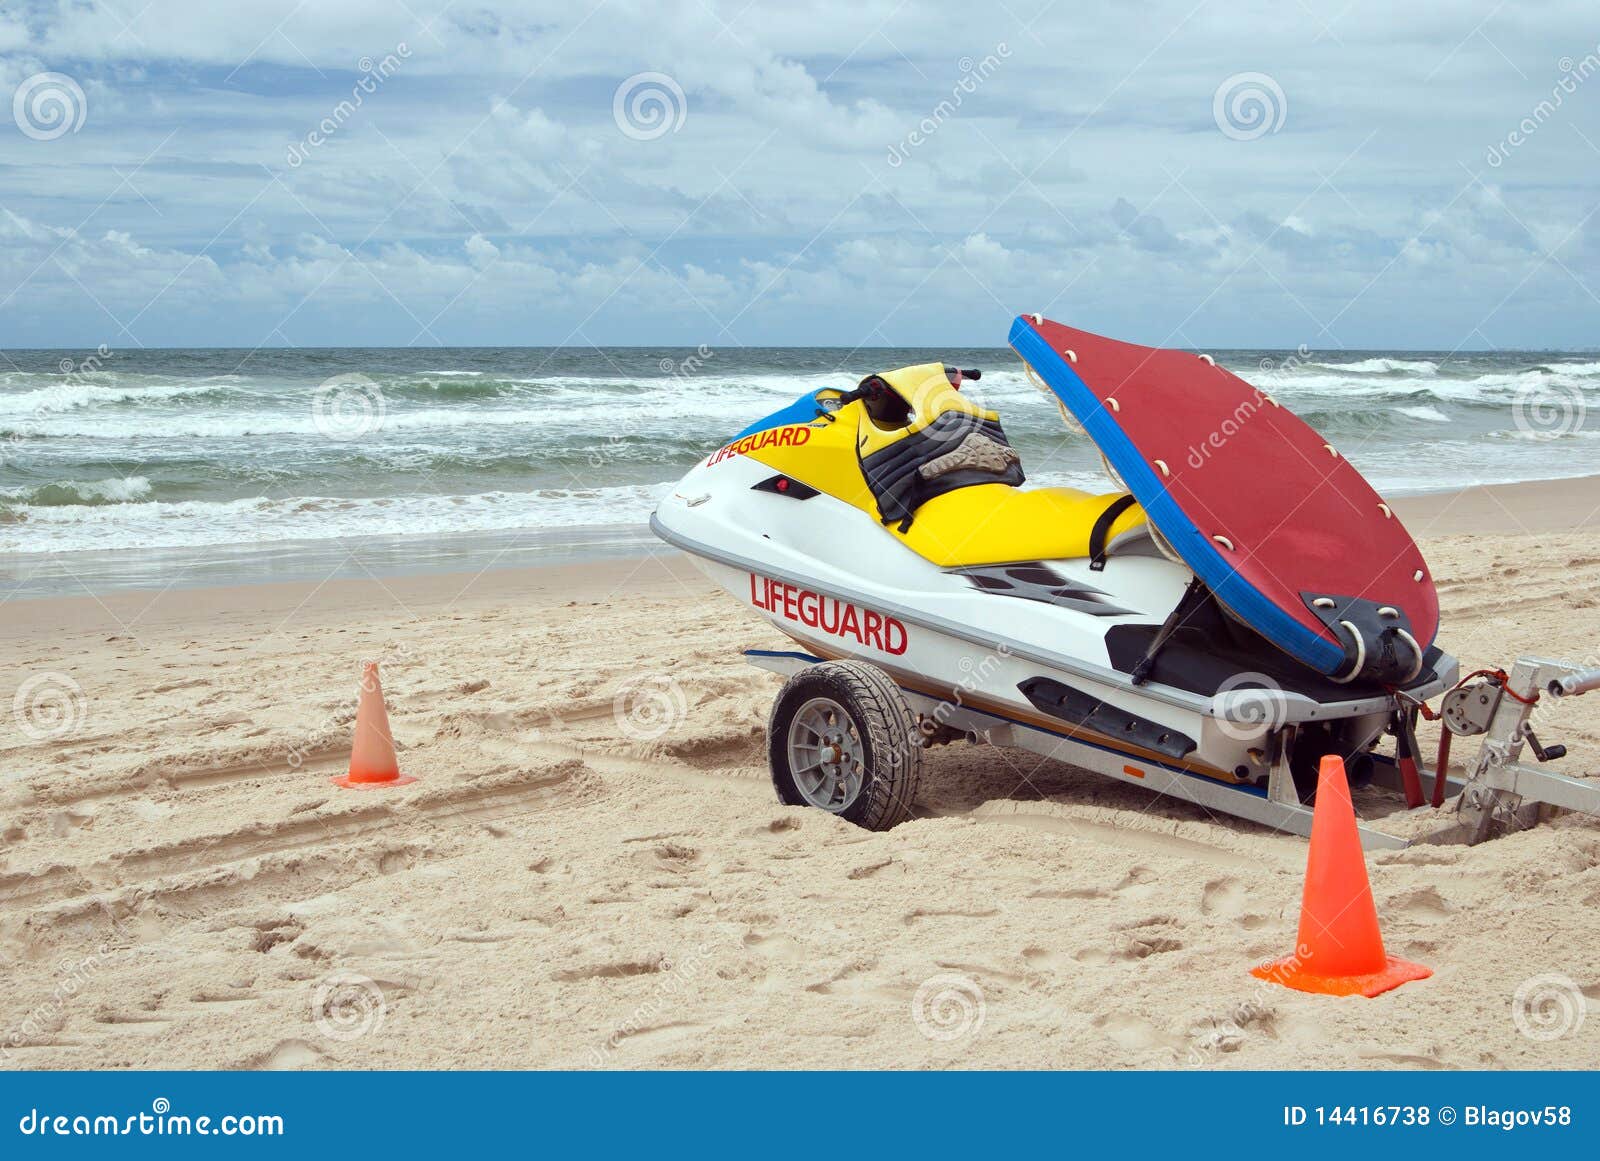 lifeguard jetboat on ocean beach